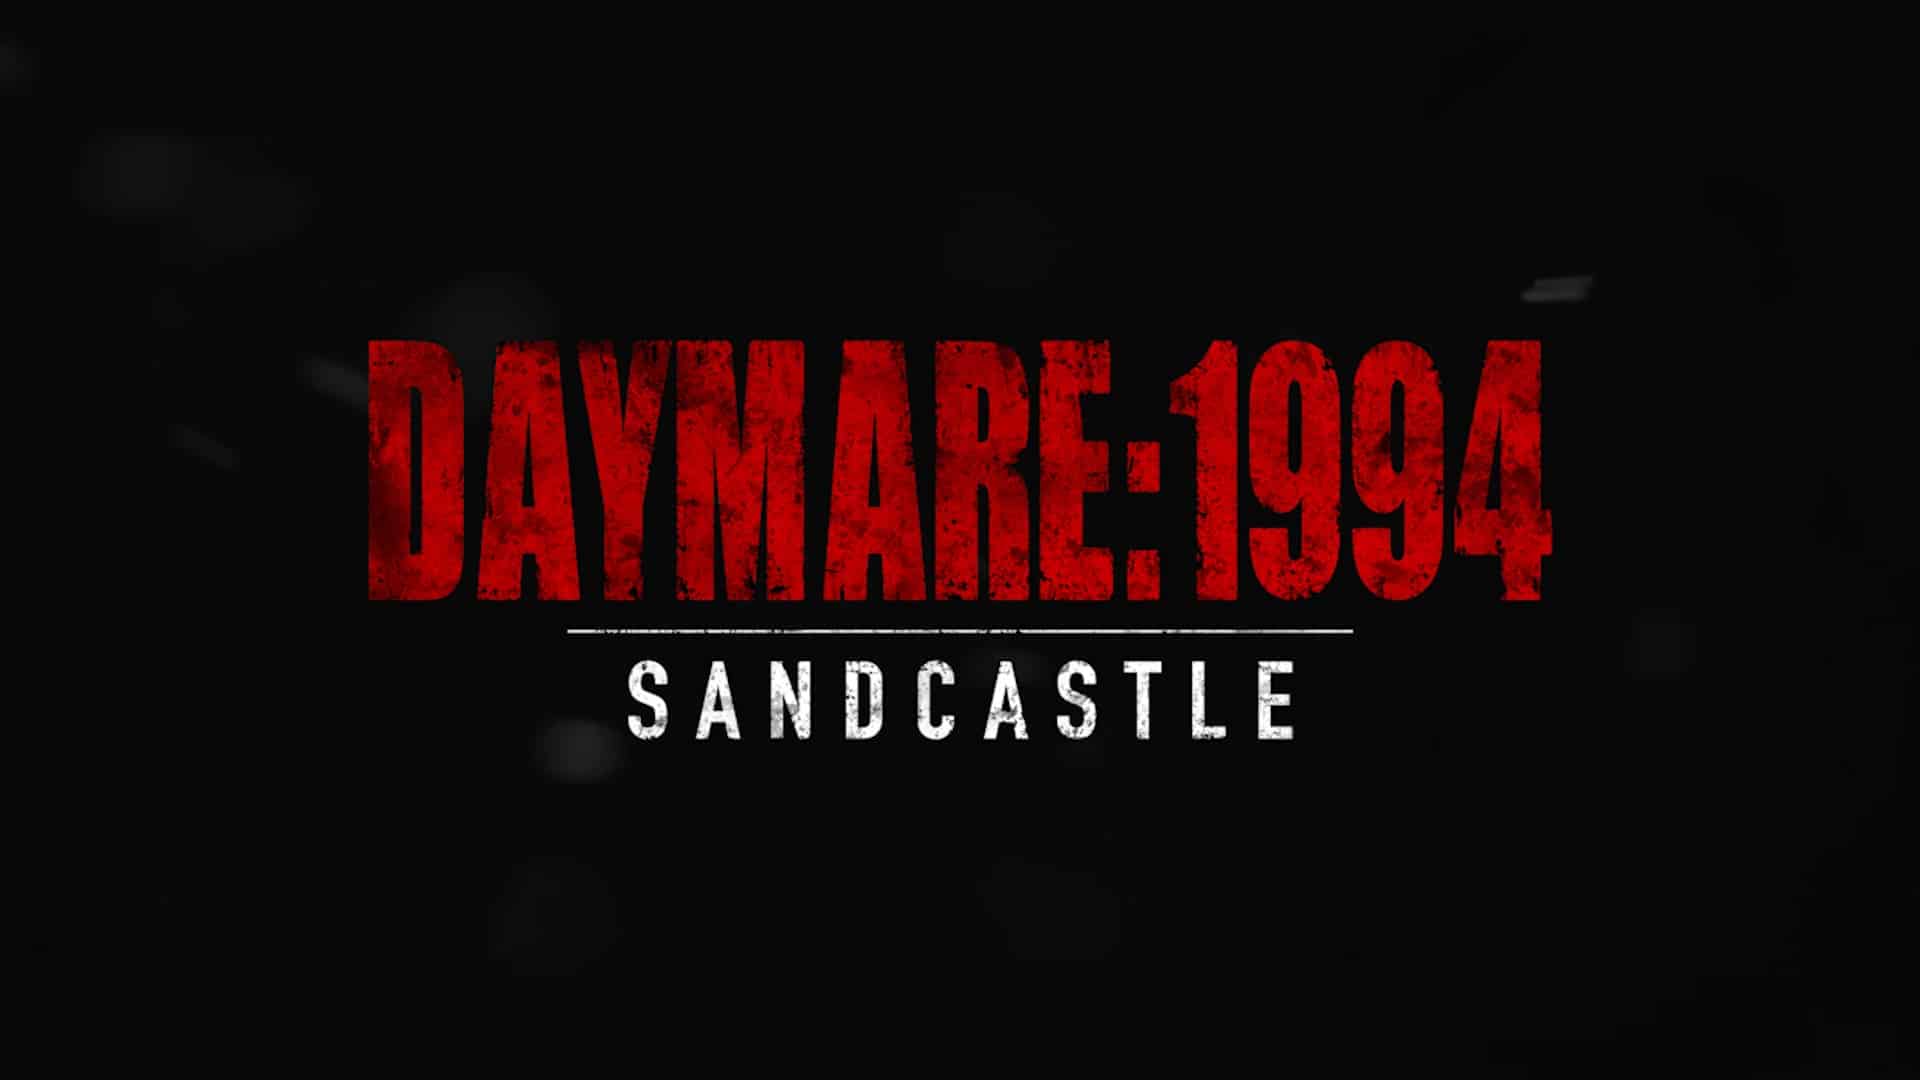 Daymare: 1994 Sandcastle